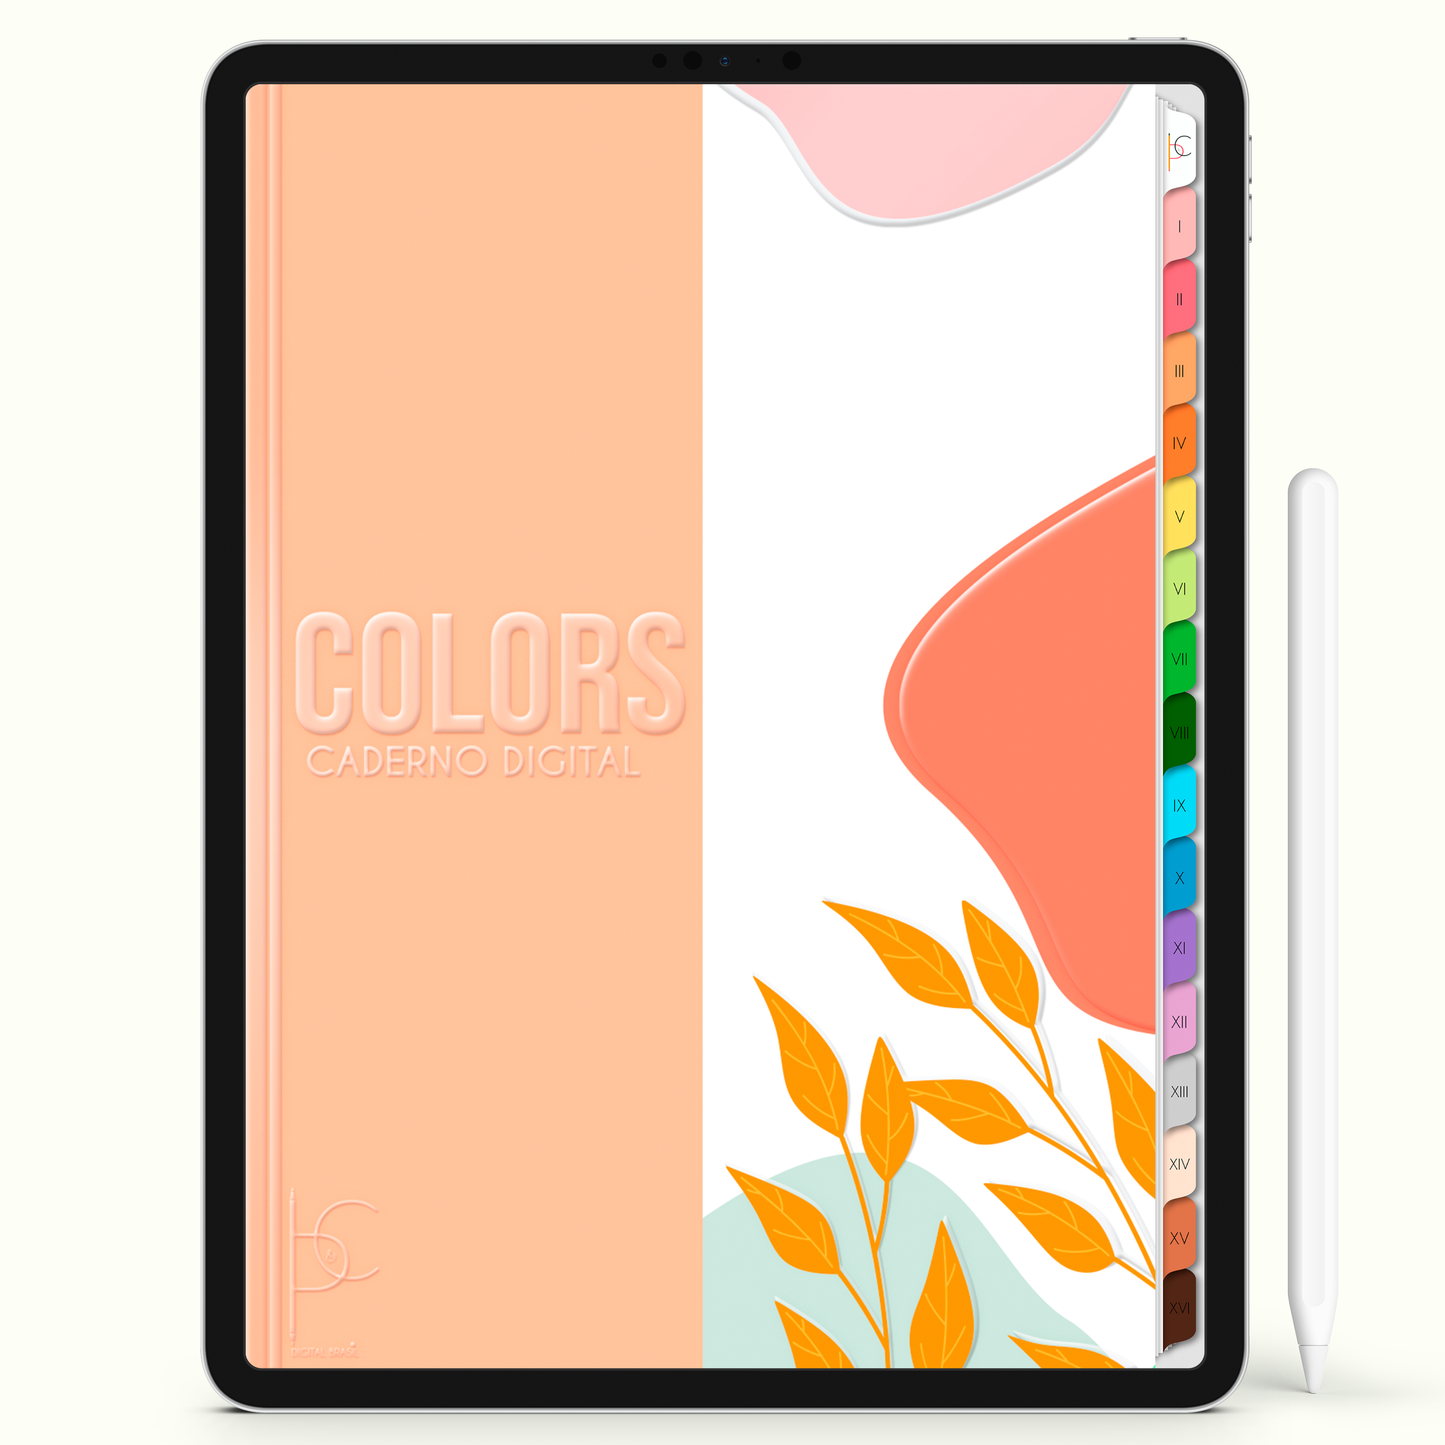 Caderno Digital Colors 16 Bele Study Matérias • iPad Tablet Android • Download instantâneo • Sustentável